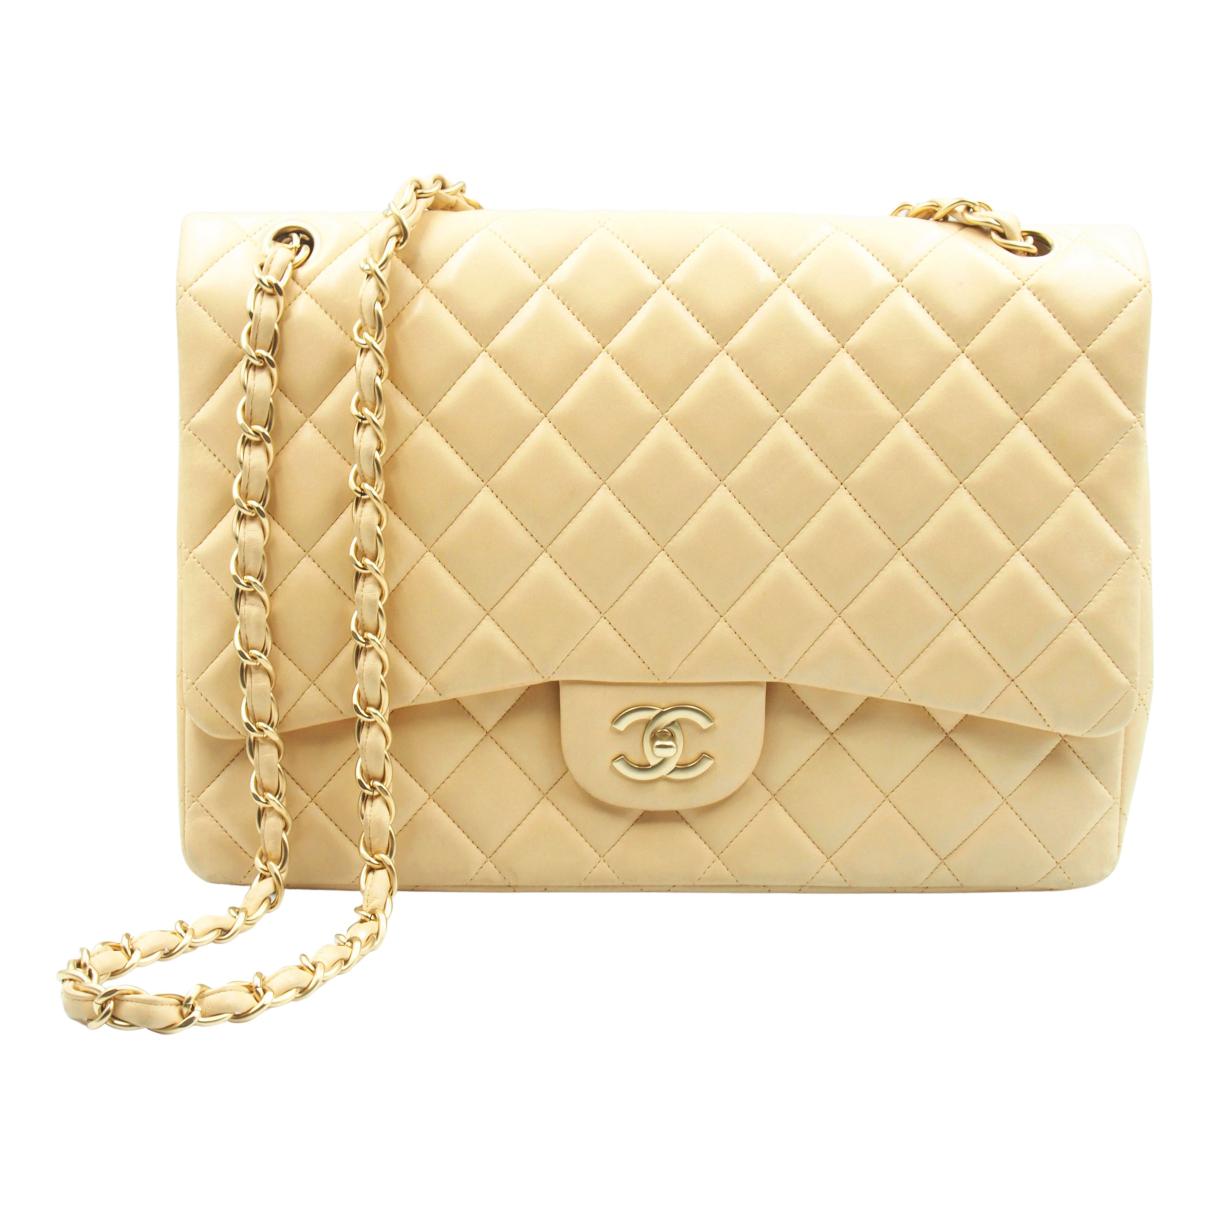 Coco Handle Chanel Handbags for Women - Vestiaire Collective